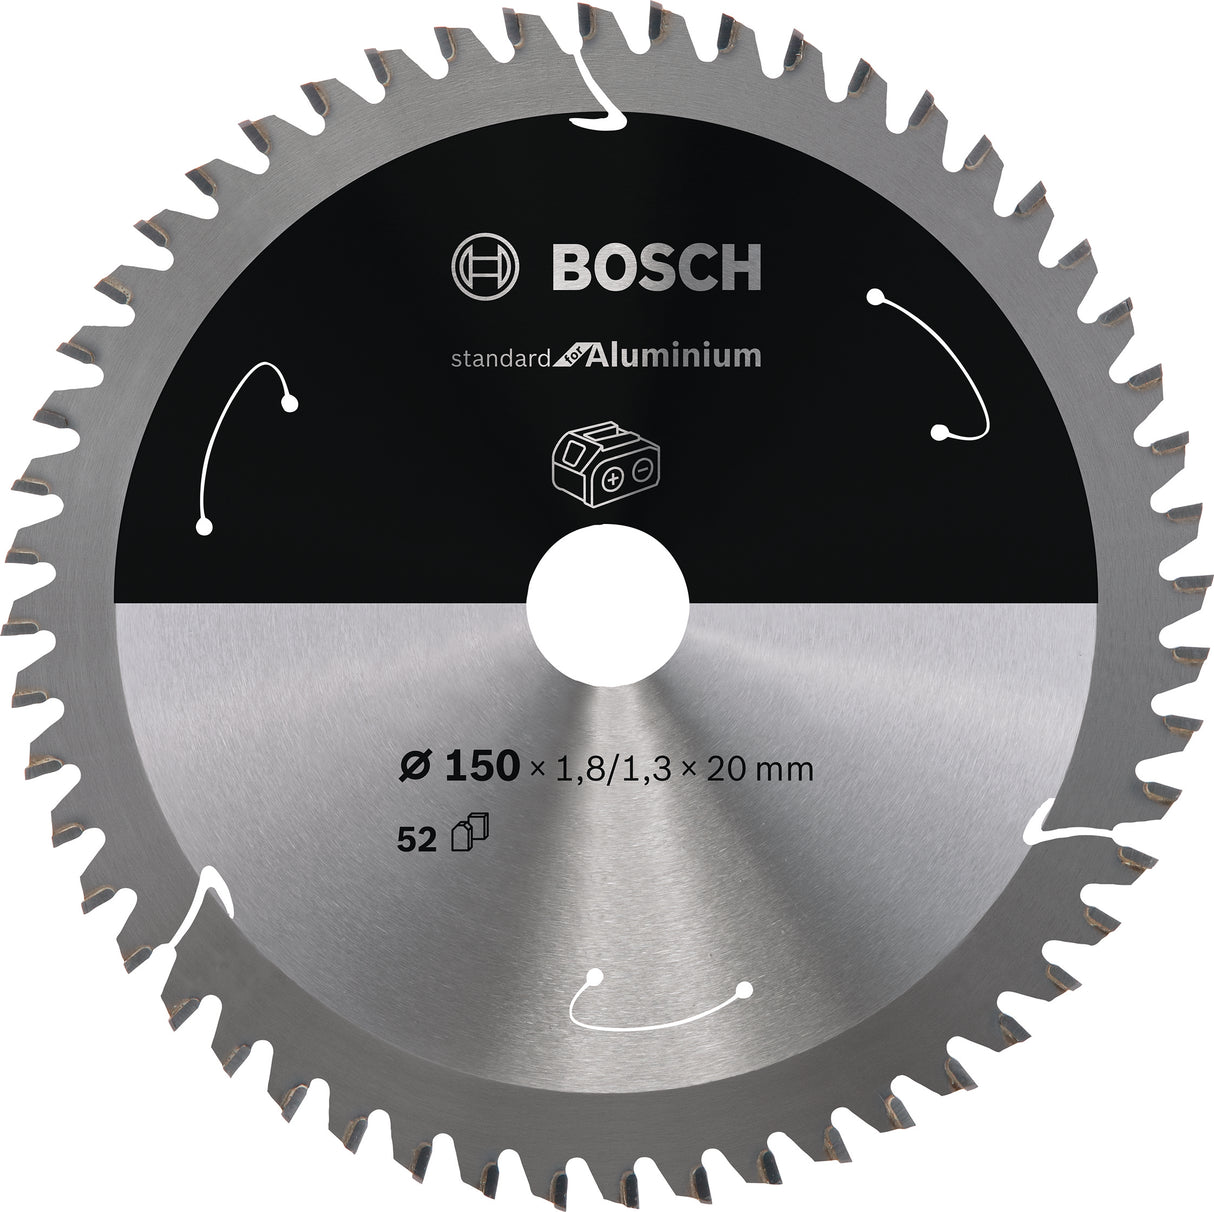 Bosch Professional Aluminium Circular Saw Blade for Cordless Saws - 150x1.8/1.3x20 T52 - Standard